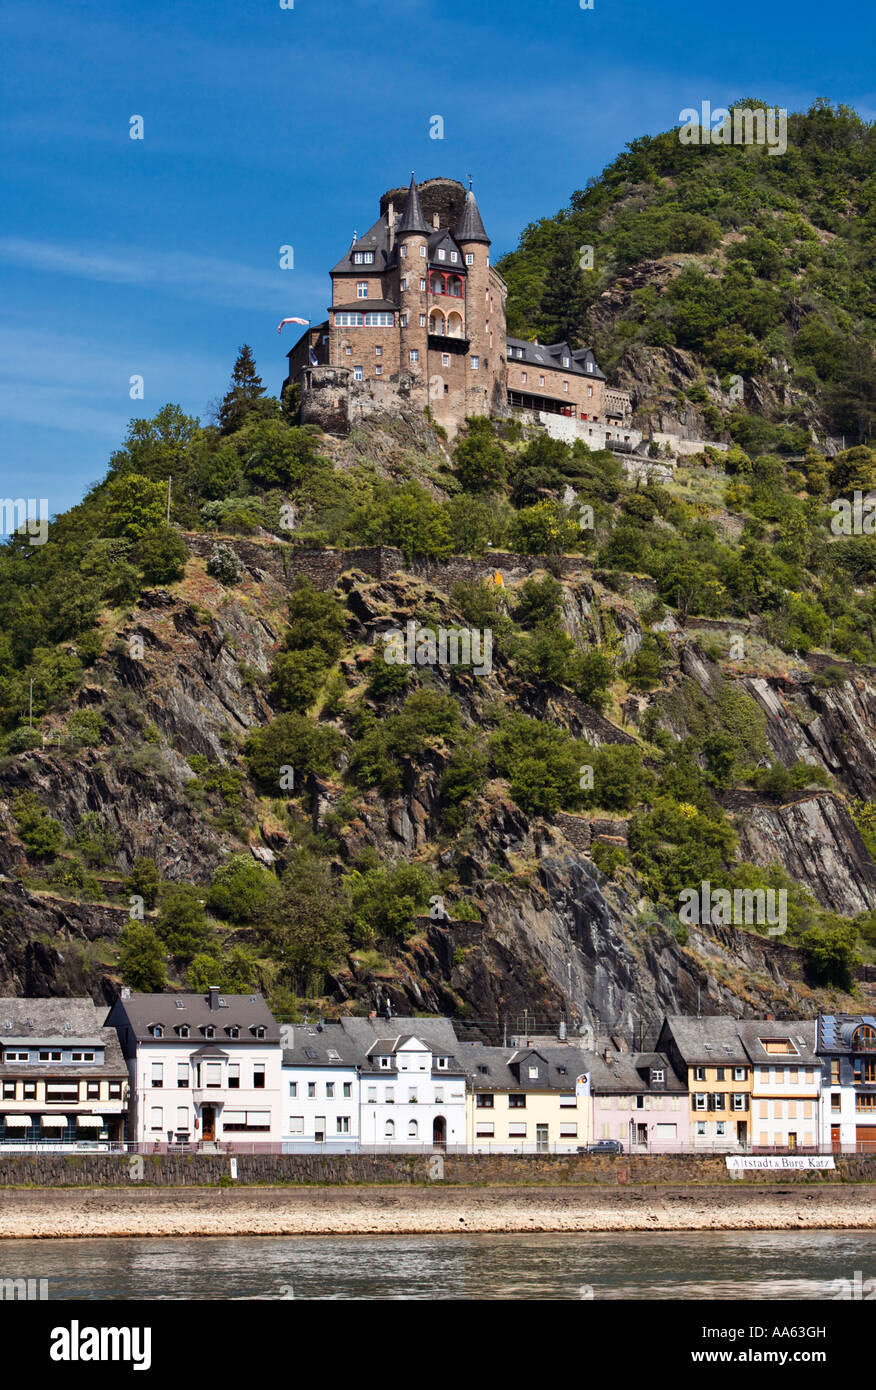 Castle Katz above St Goarshausen in the Rhine Valley, Rhineland, Germany Europe Stock Photo